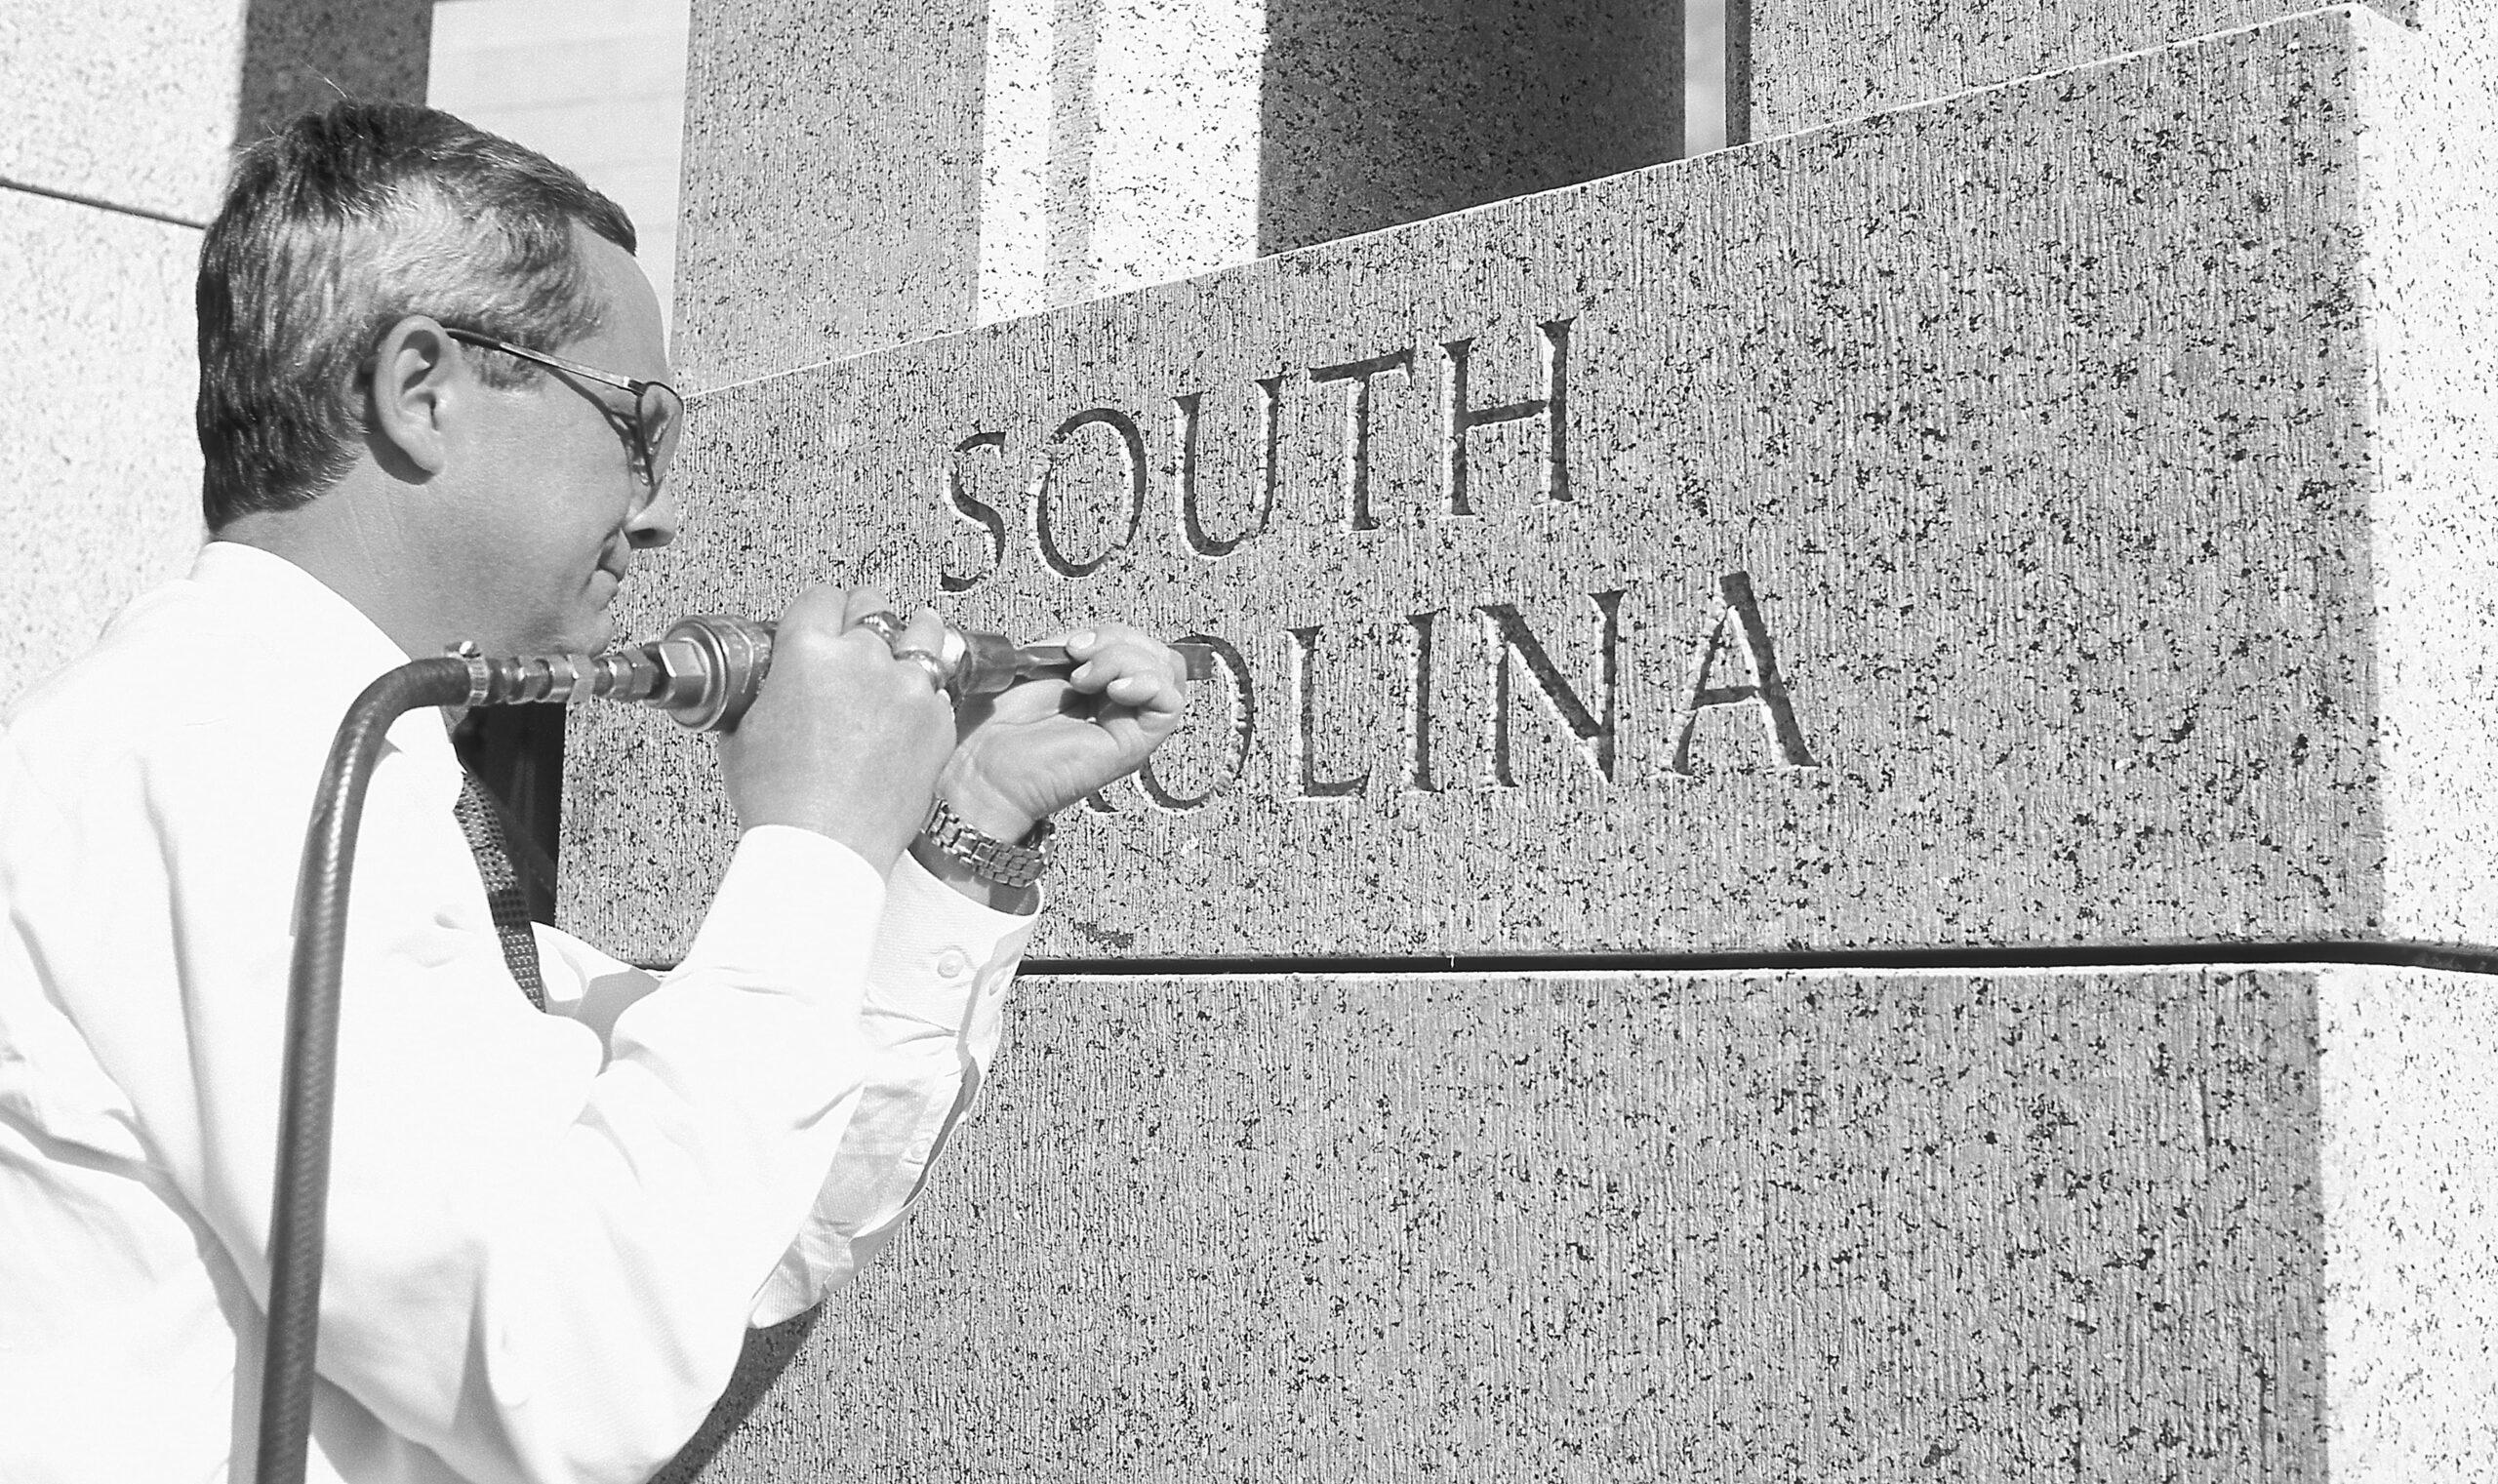 A Man Engraving South Carolina into the WWII Memorial